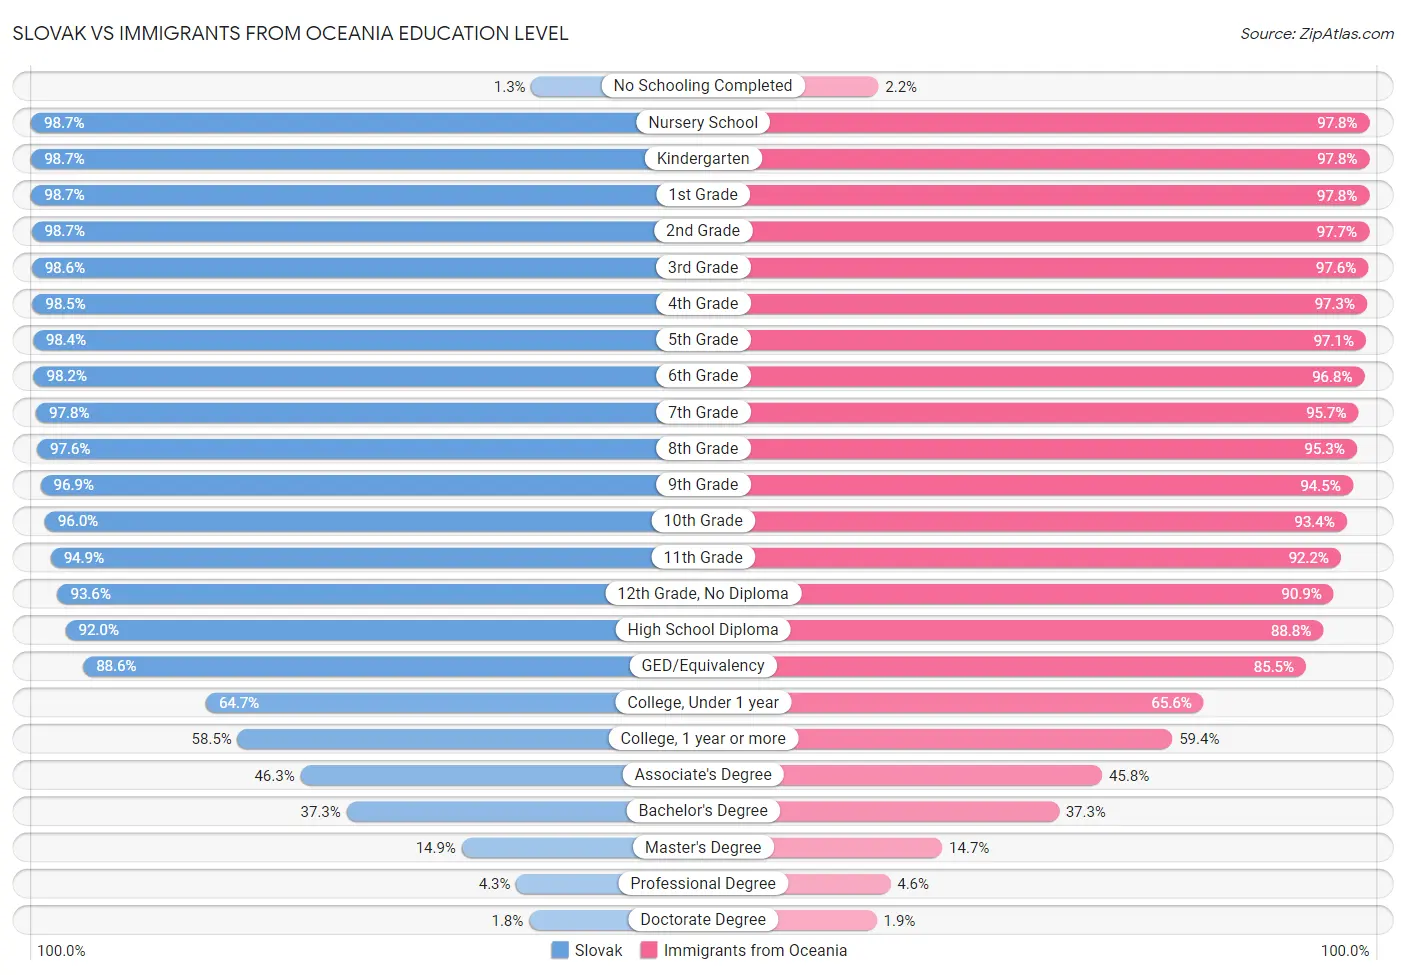 Slovak vs Immigrants from Oceania Education Level